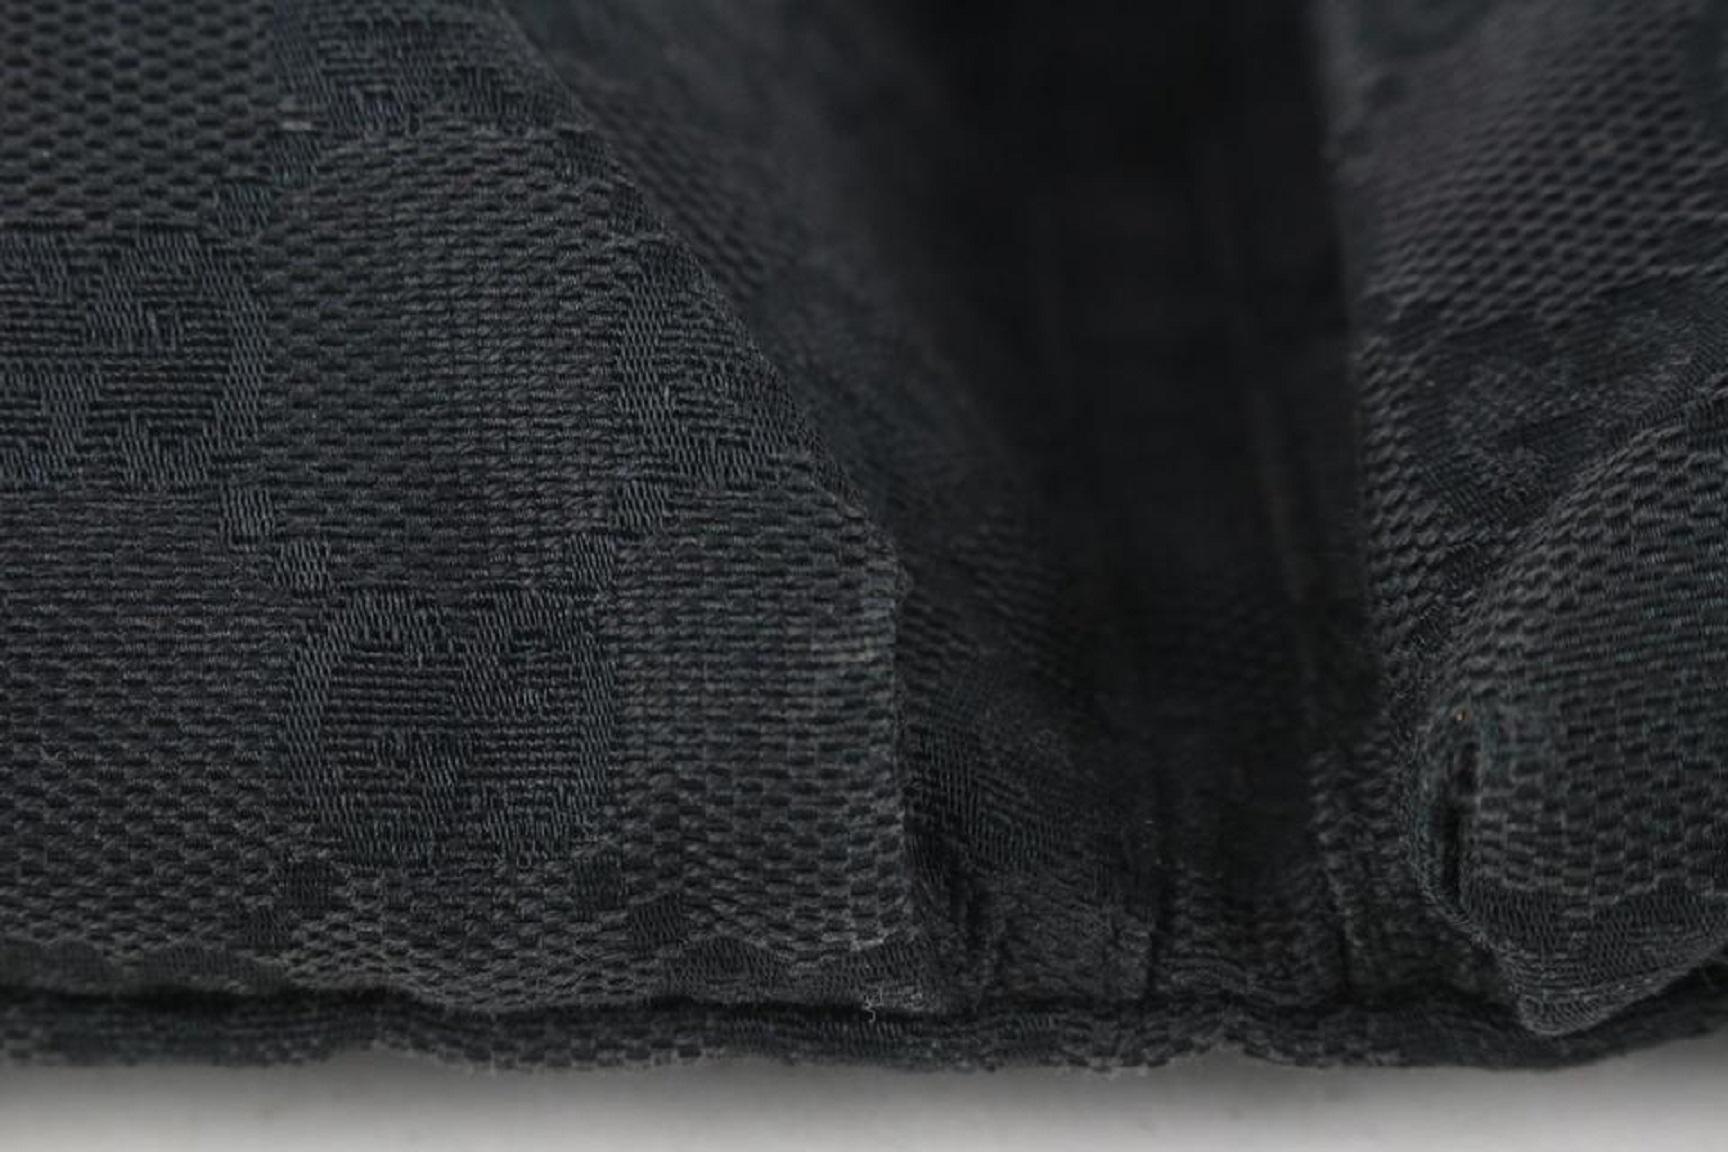 Gucci Black Monogram GG Belt Bag Fanny Pack Waist Pouch 105g5 4